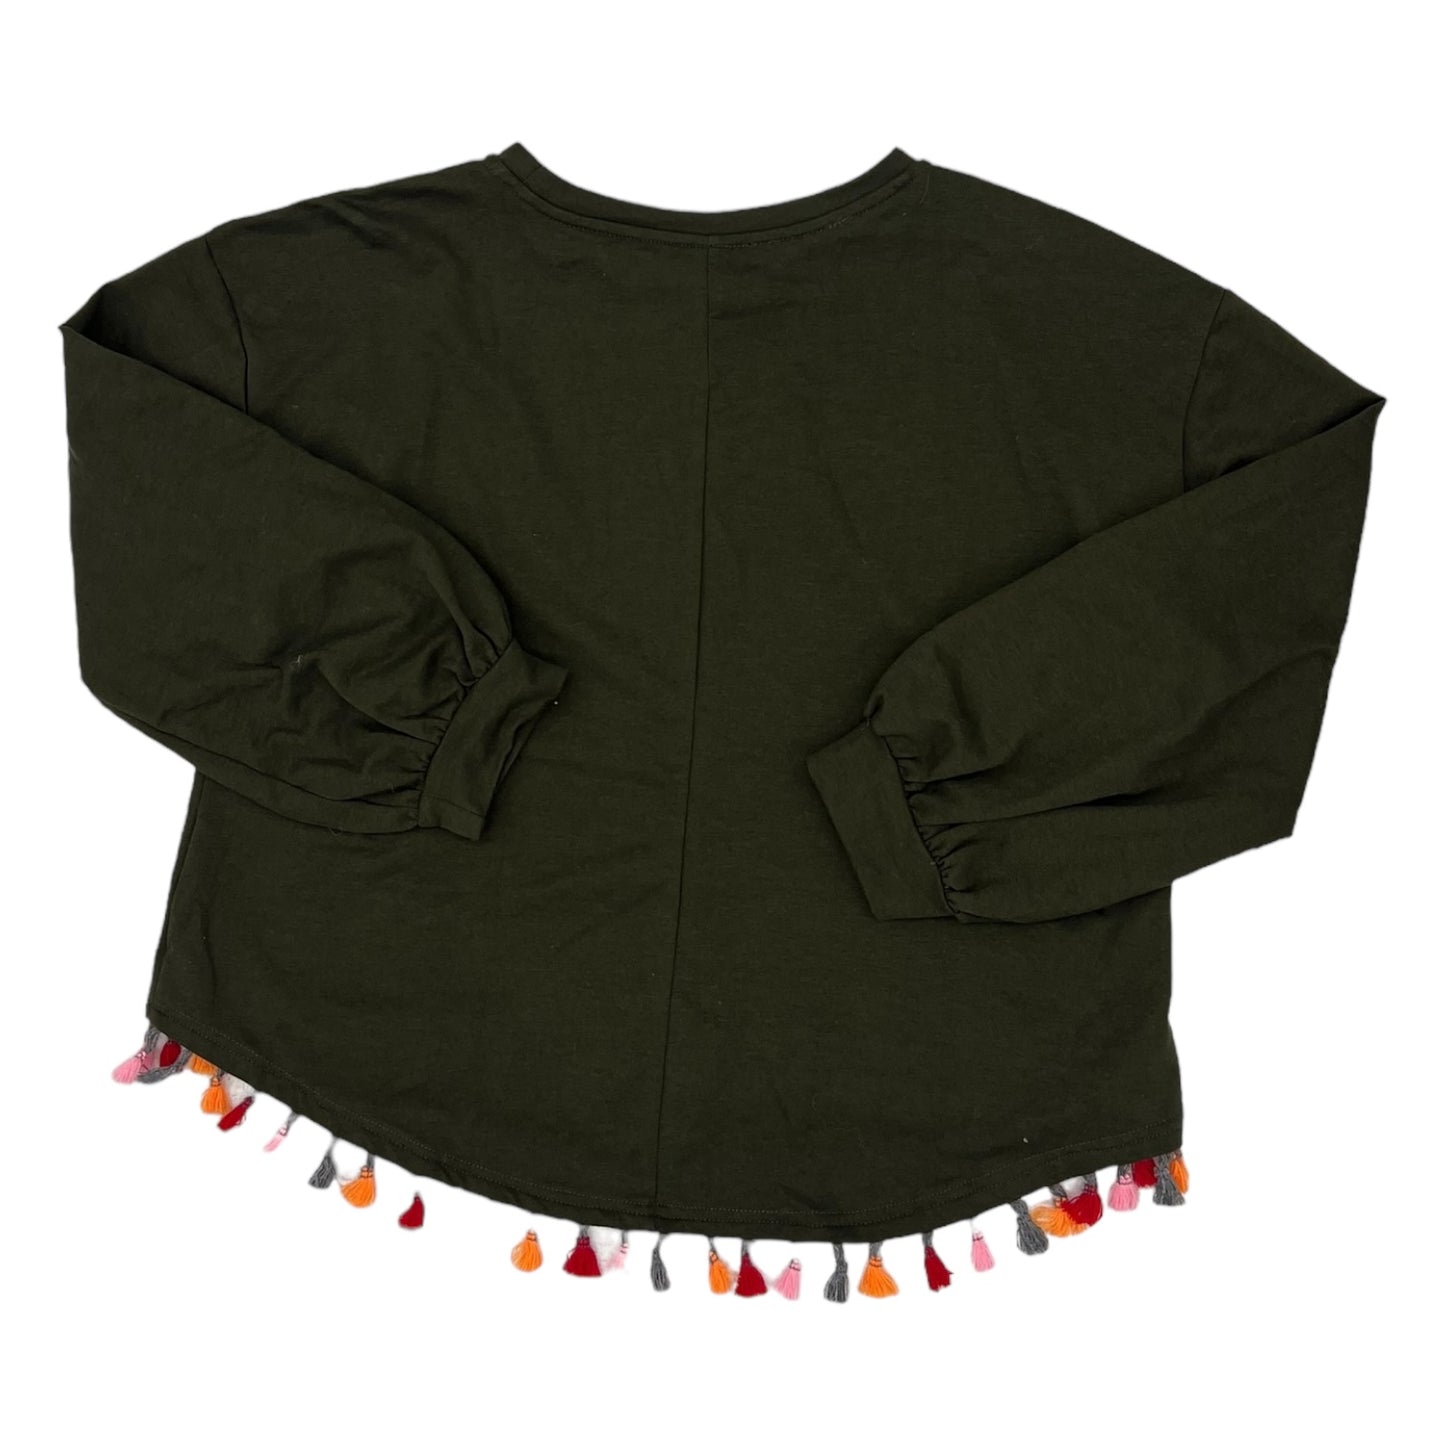 Sweatshirt Crewneck By Clothes Mentor  Size: M